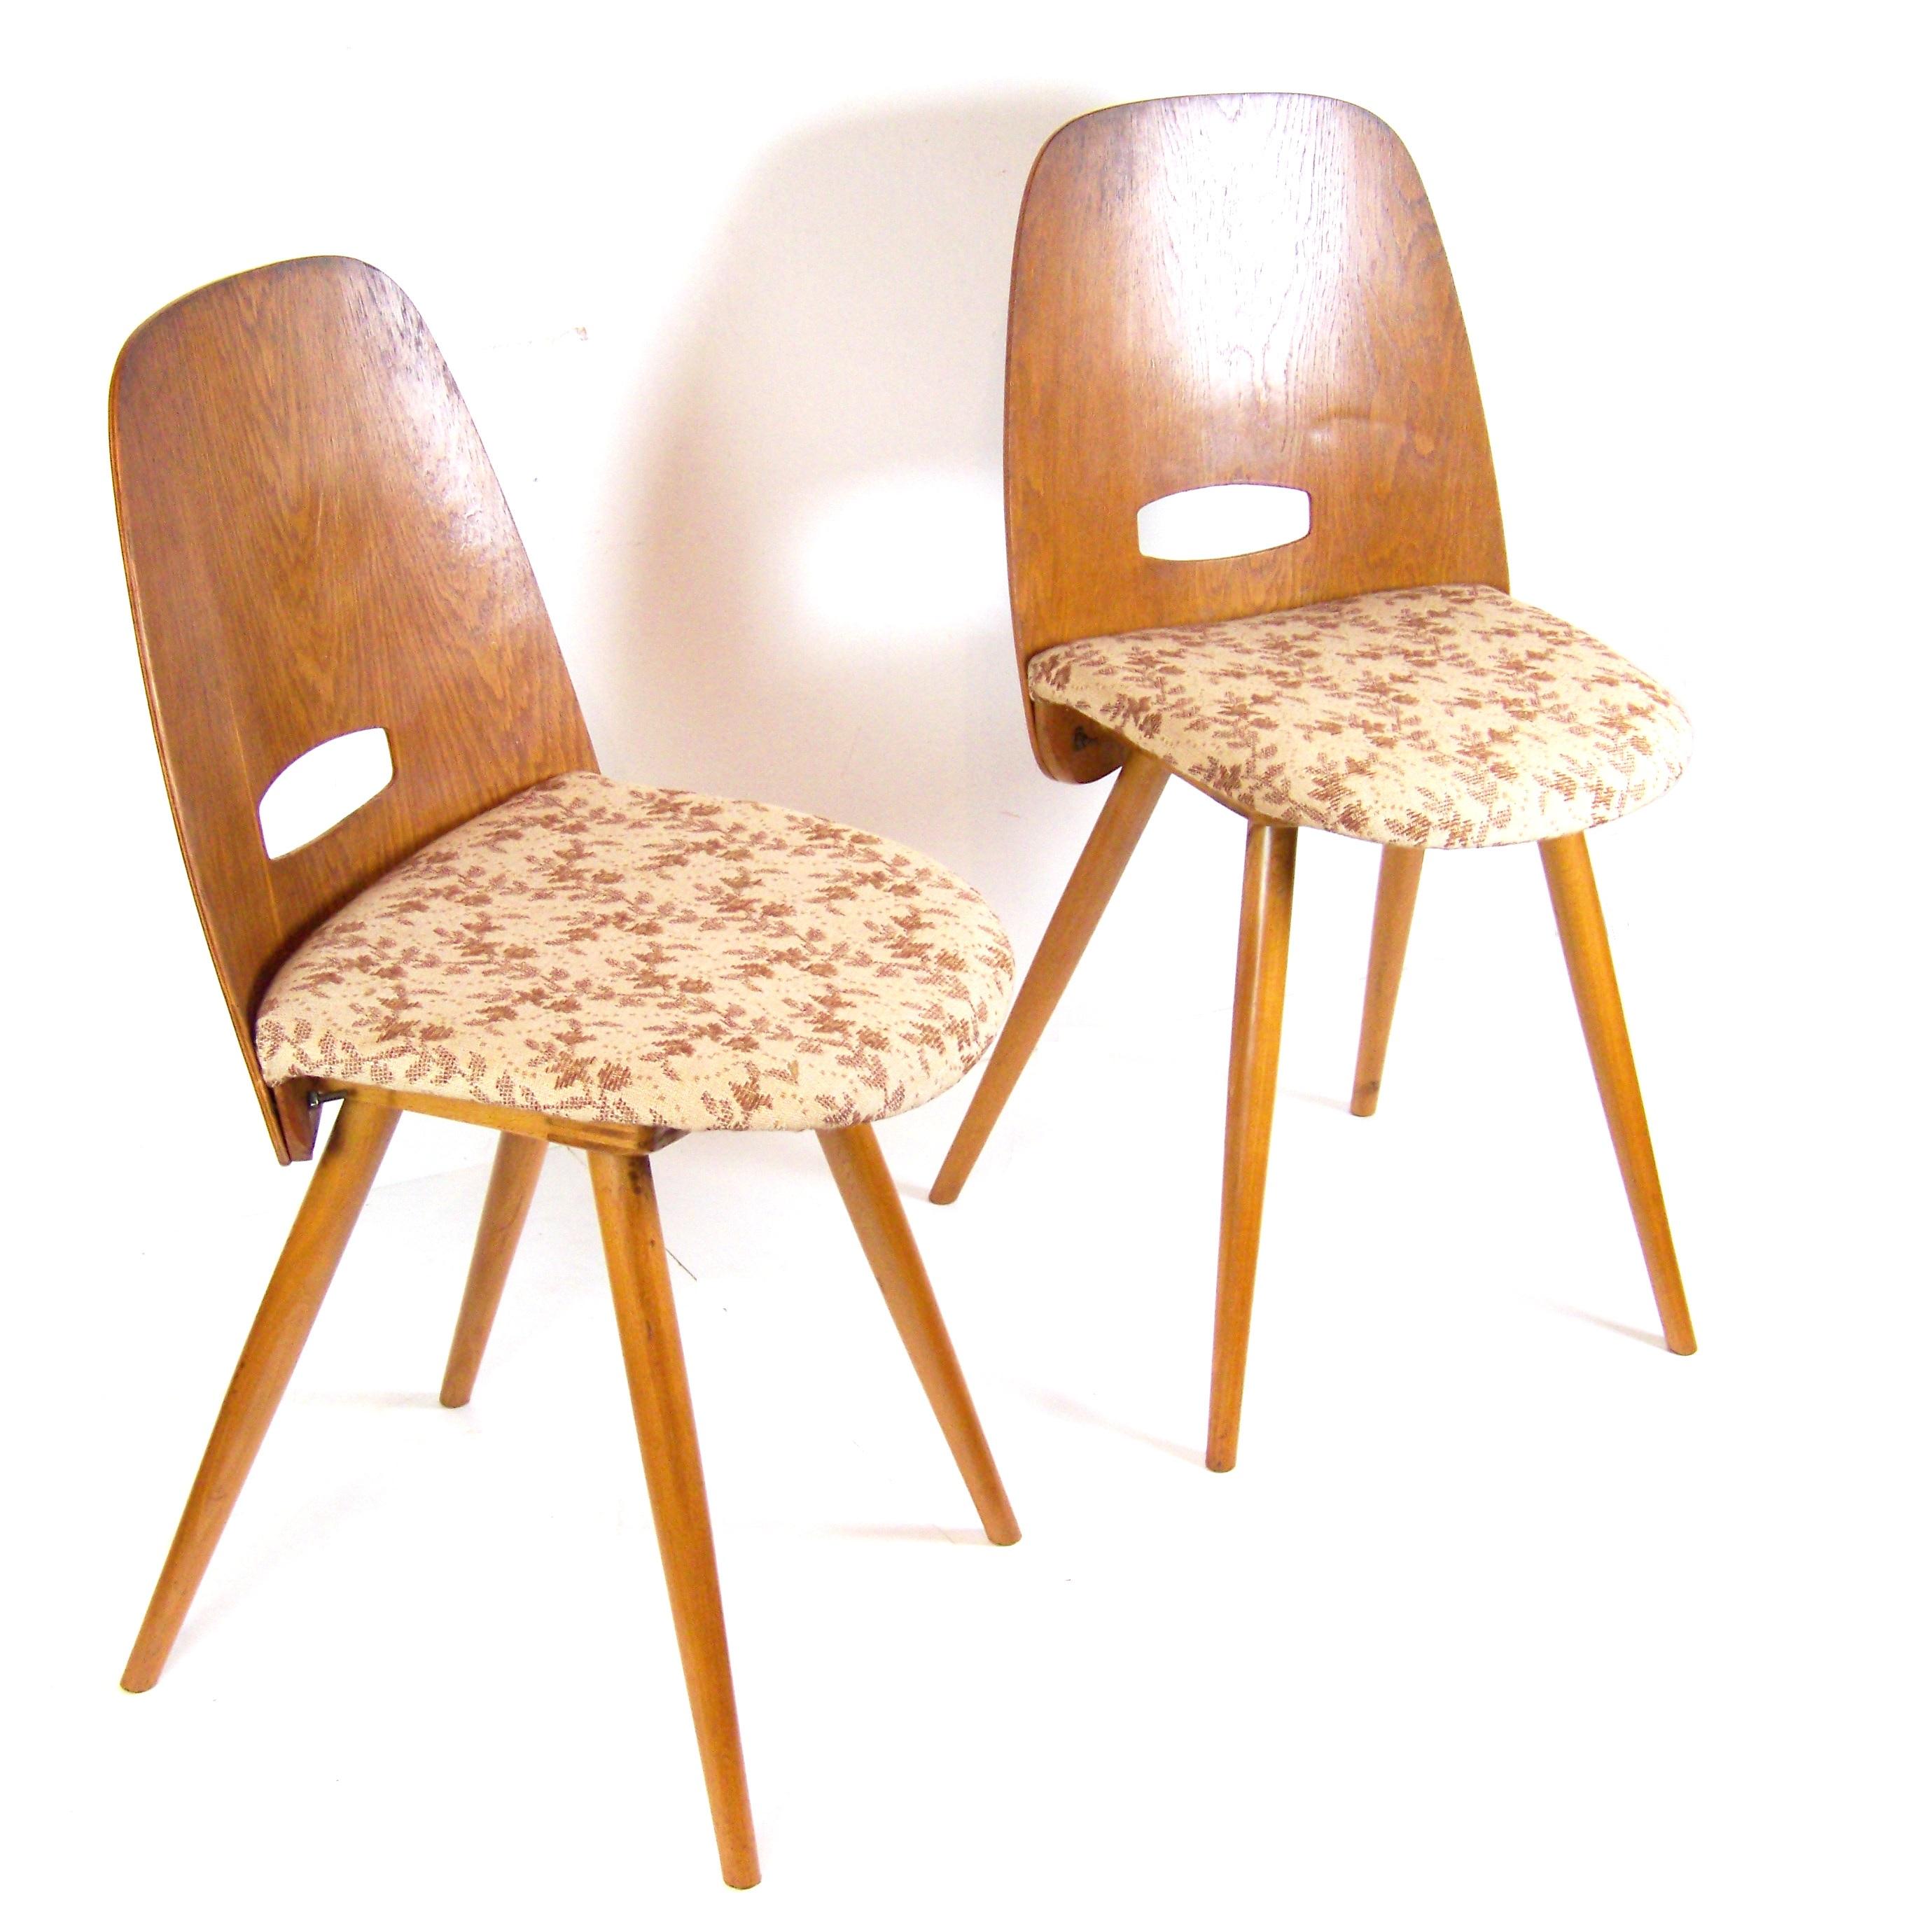 Set of two midcentury chairs Tatra designed by Frantisek Jirak, 1950s.